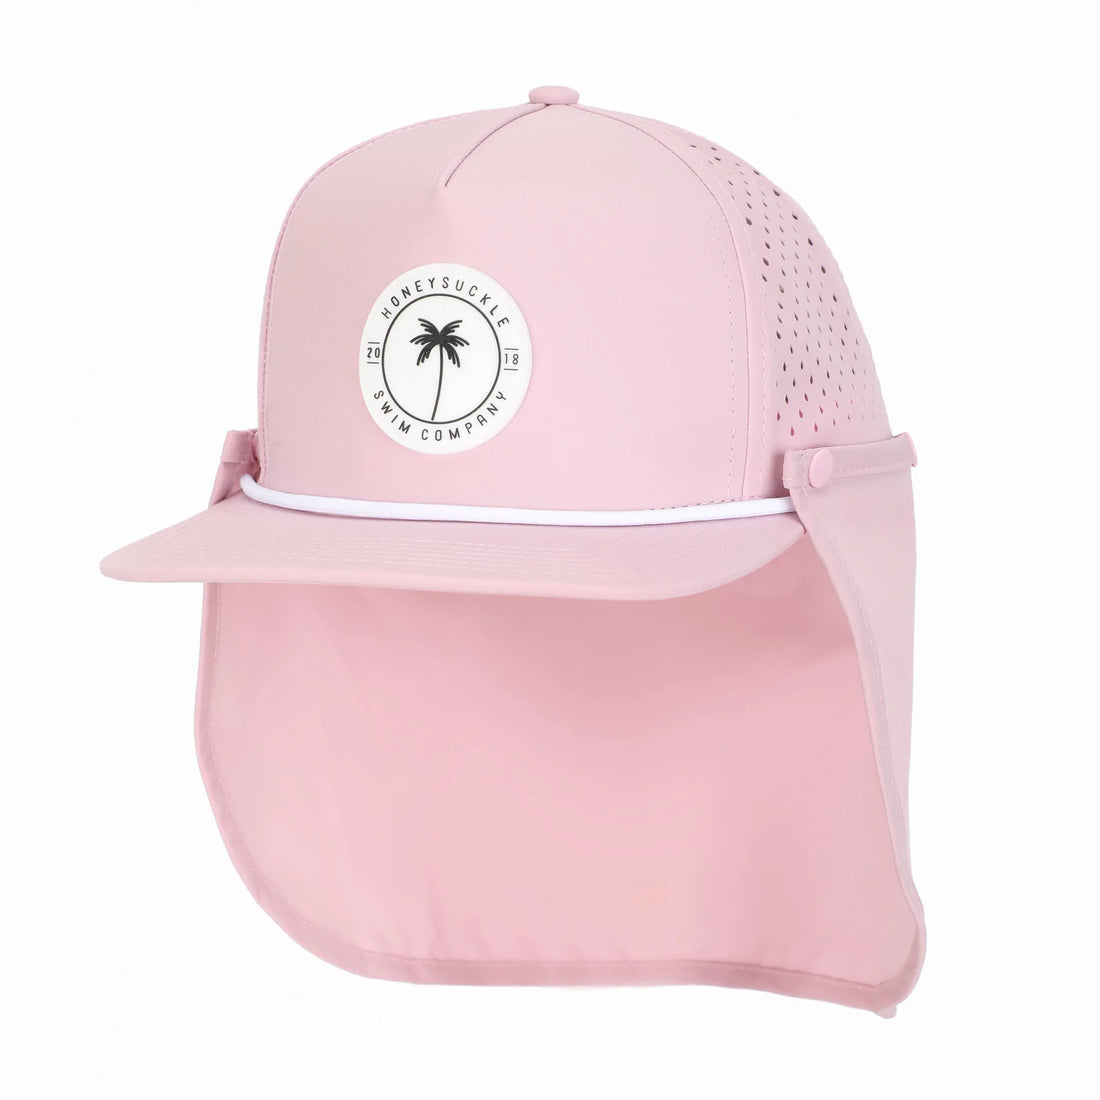 Honeysuckle Swim Co - Snapback Hat (Light Pink)